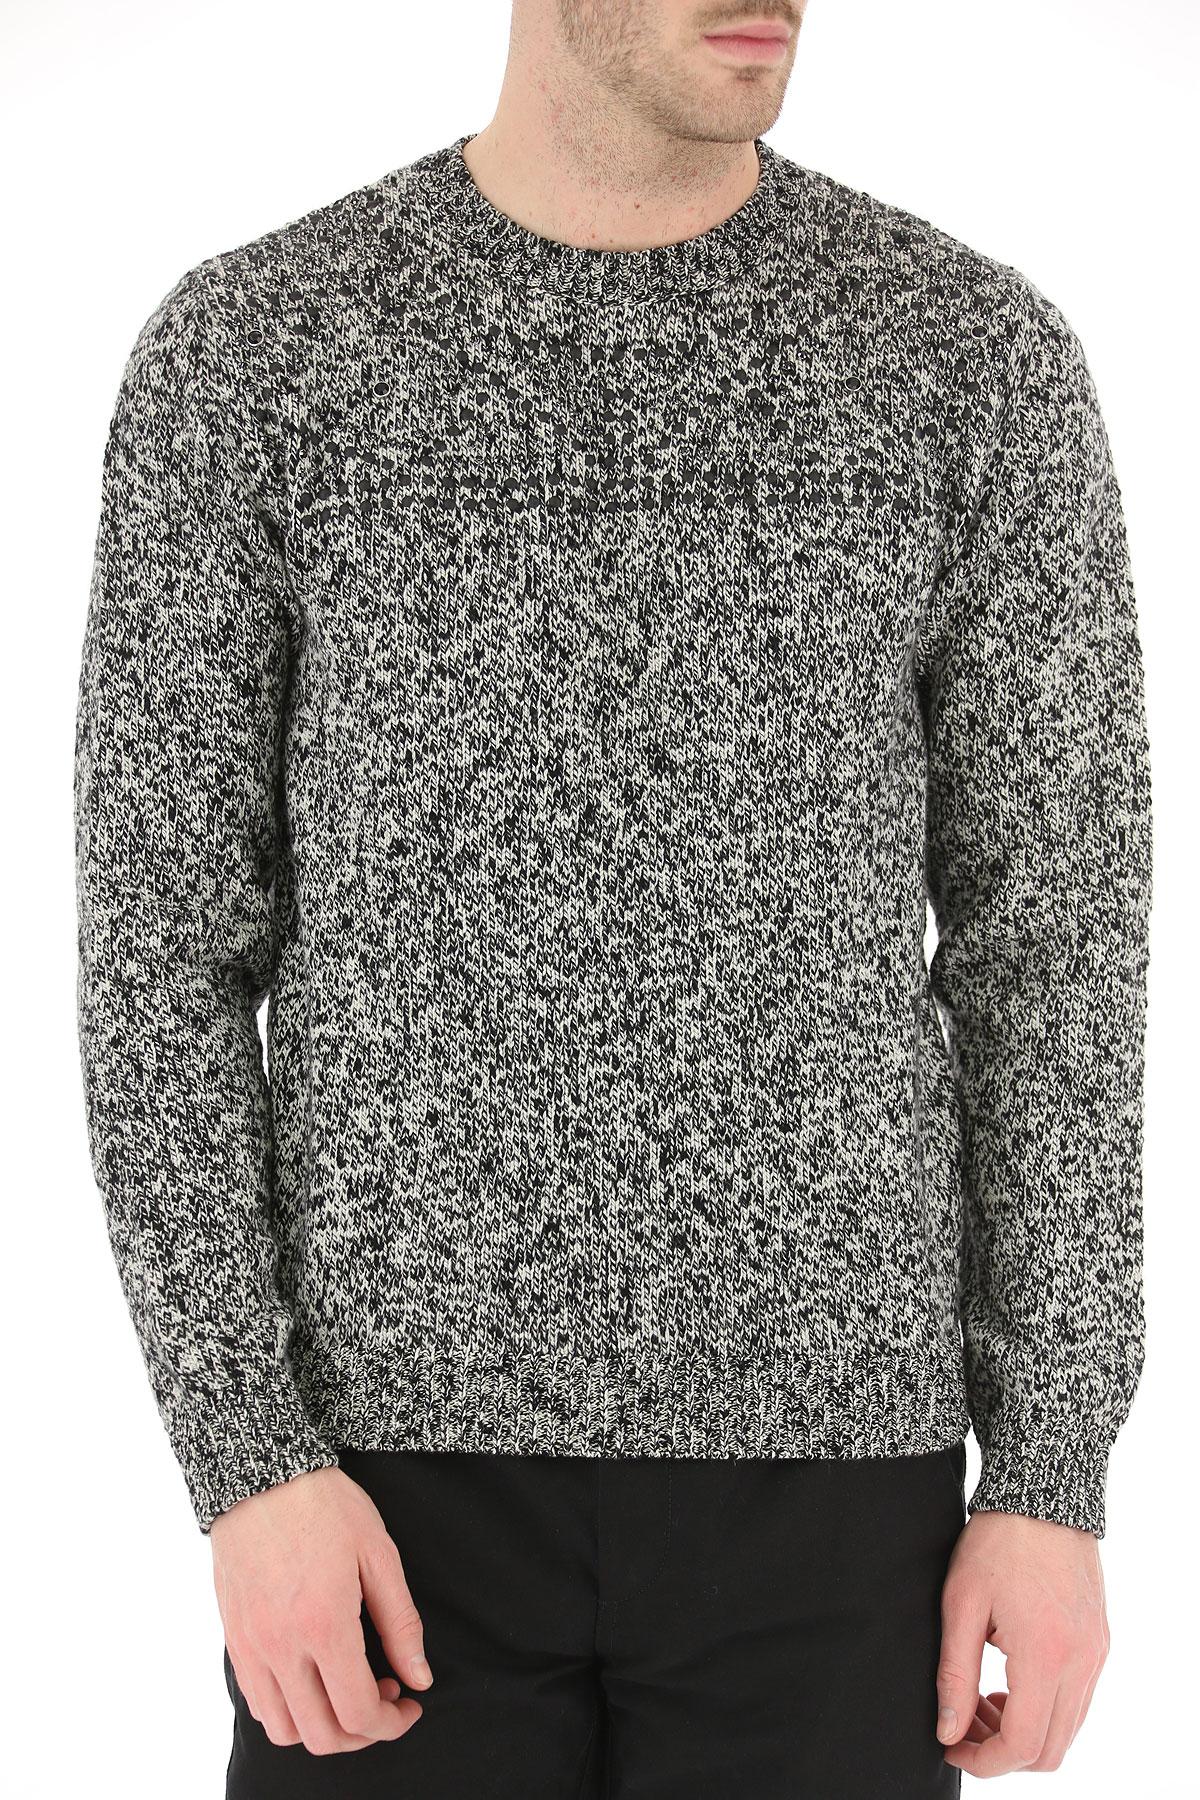 Valentino Sweater For Men Jumper in Black for Men - Lyst